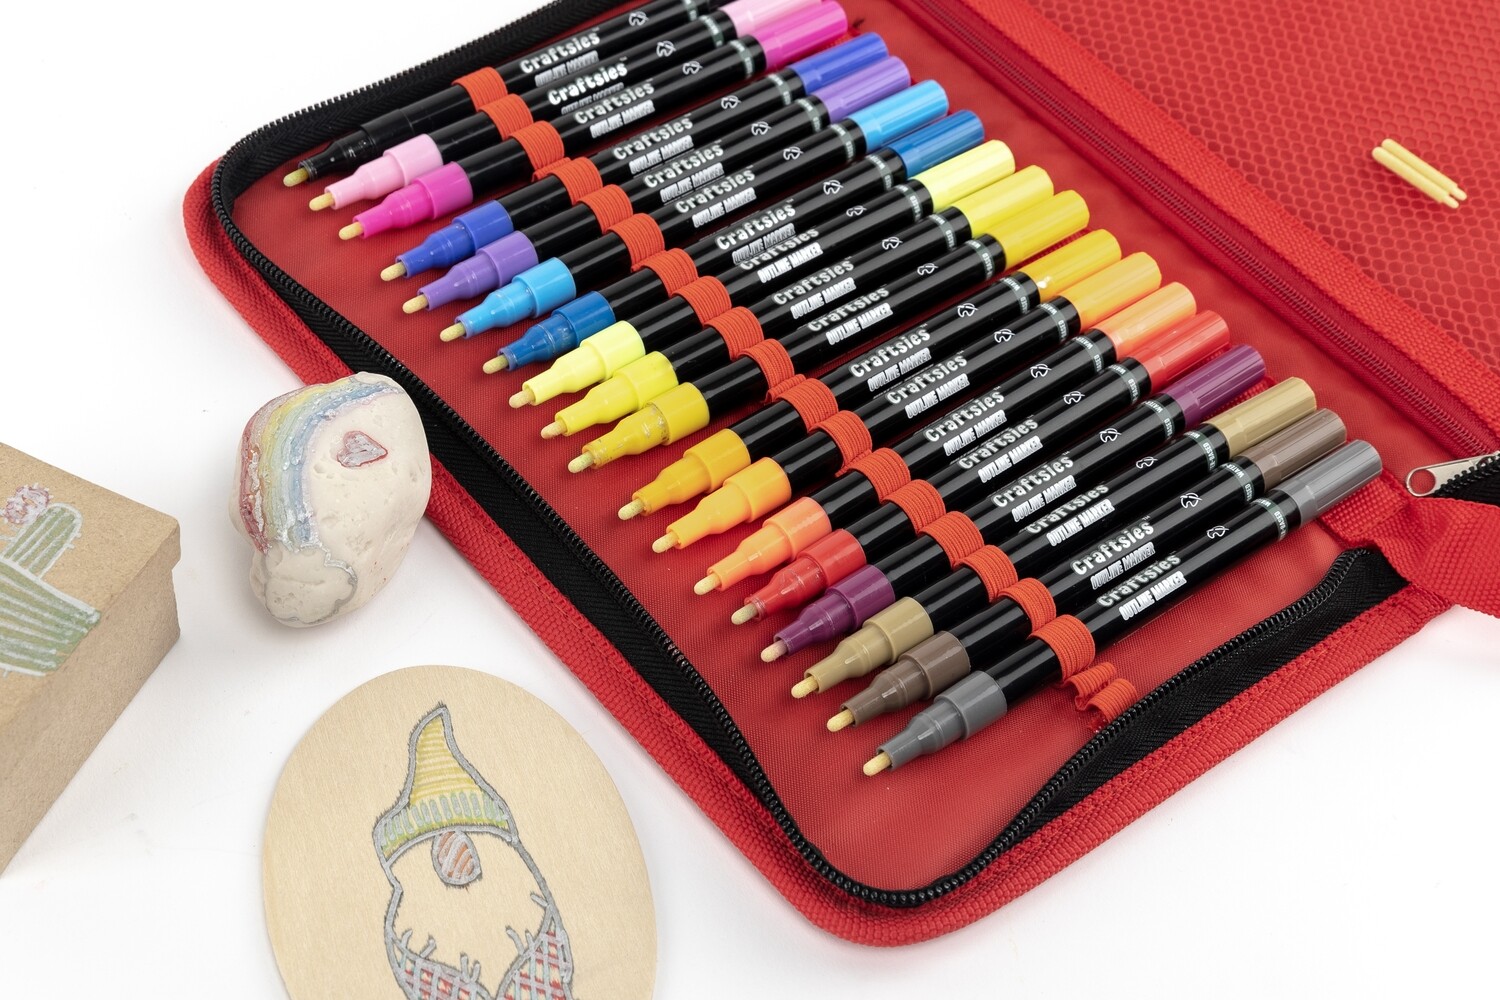 Craftsies Metallic Outline Markers|18 Self-Outline colors| 1mm Premium Fine Tip| 2 extra nibs| Bonus Cursive Writing Course| Premium Canvas case